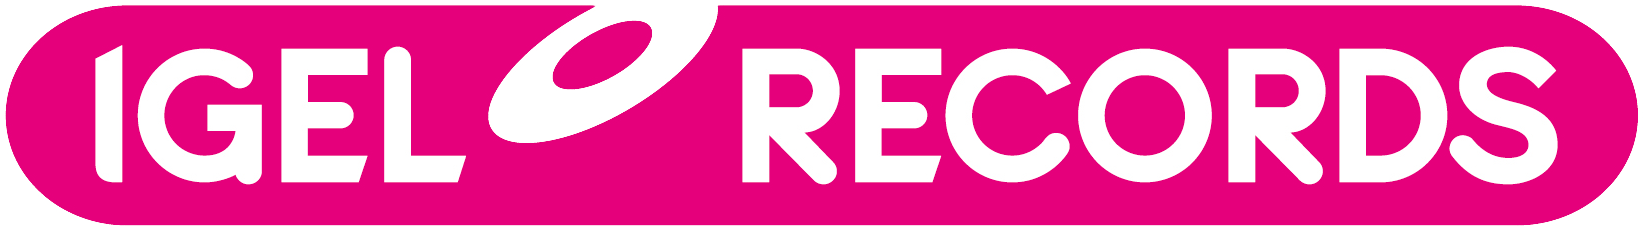 Lieferant Igel Records Logo